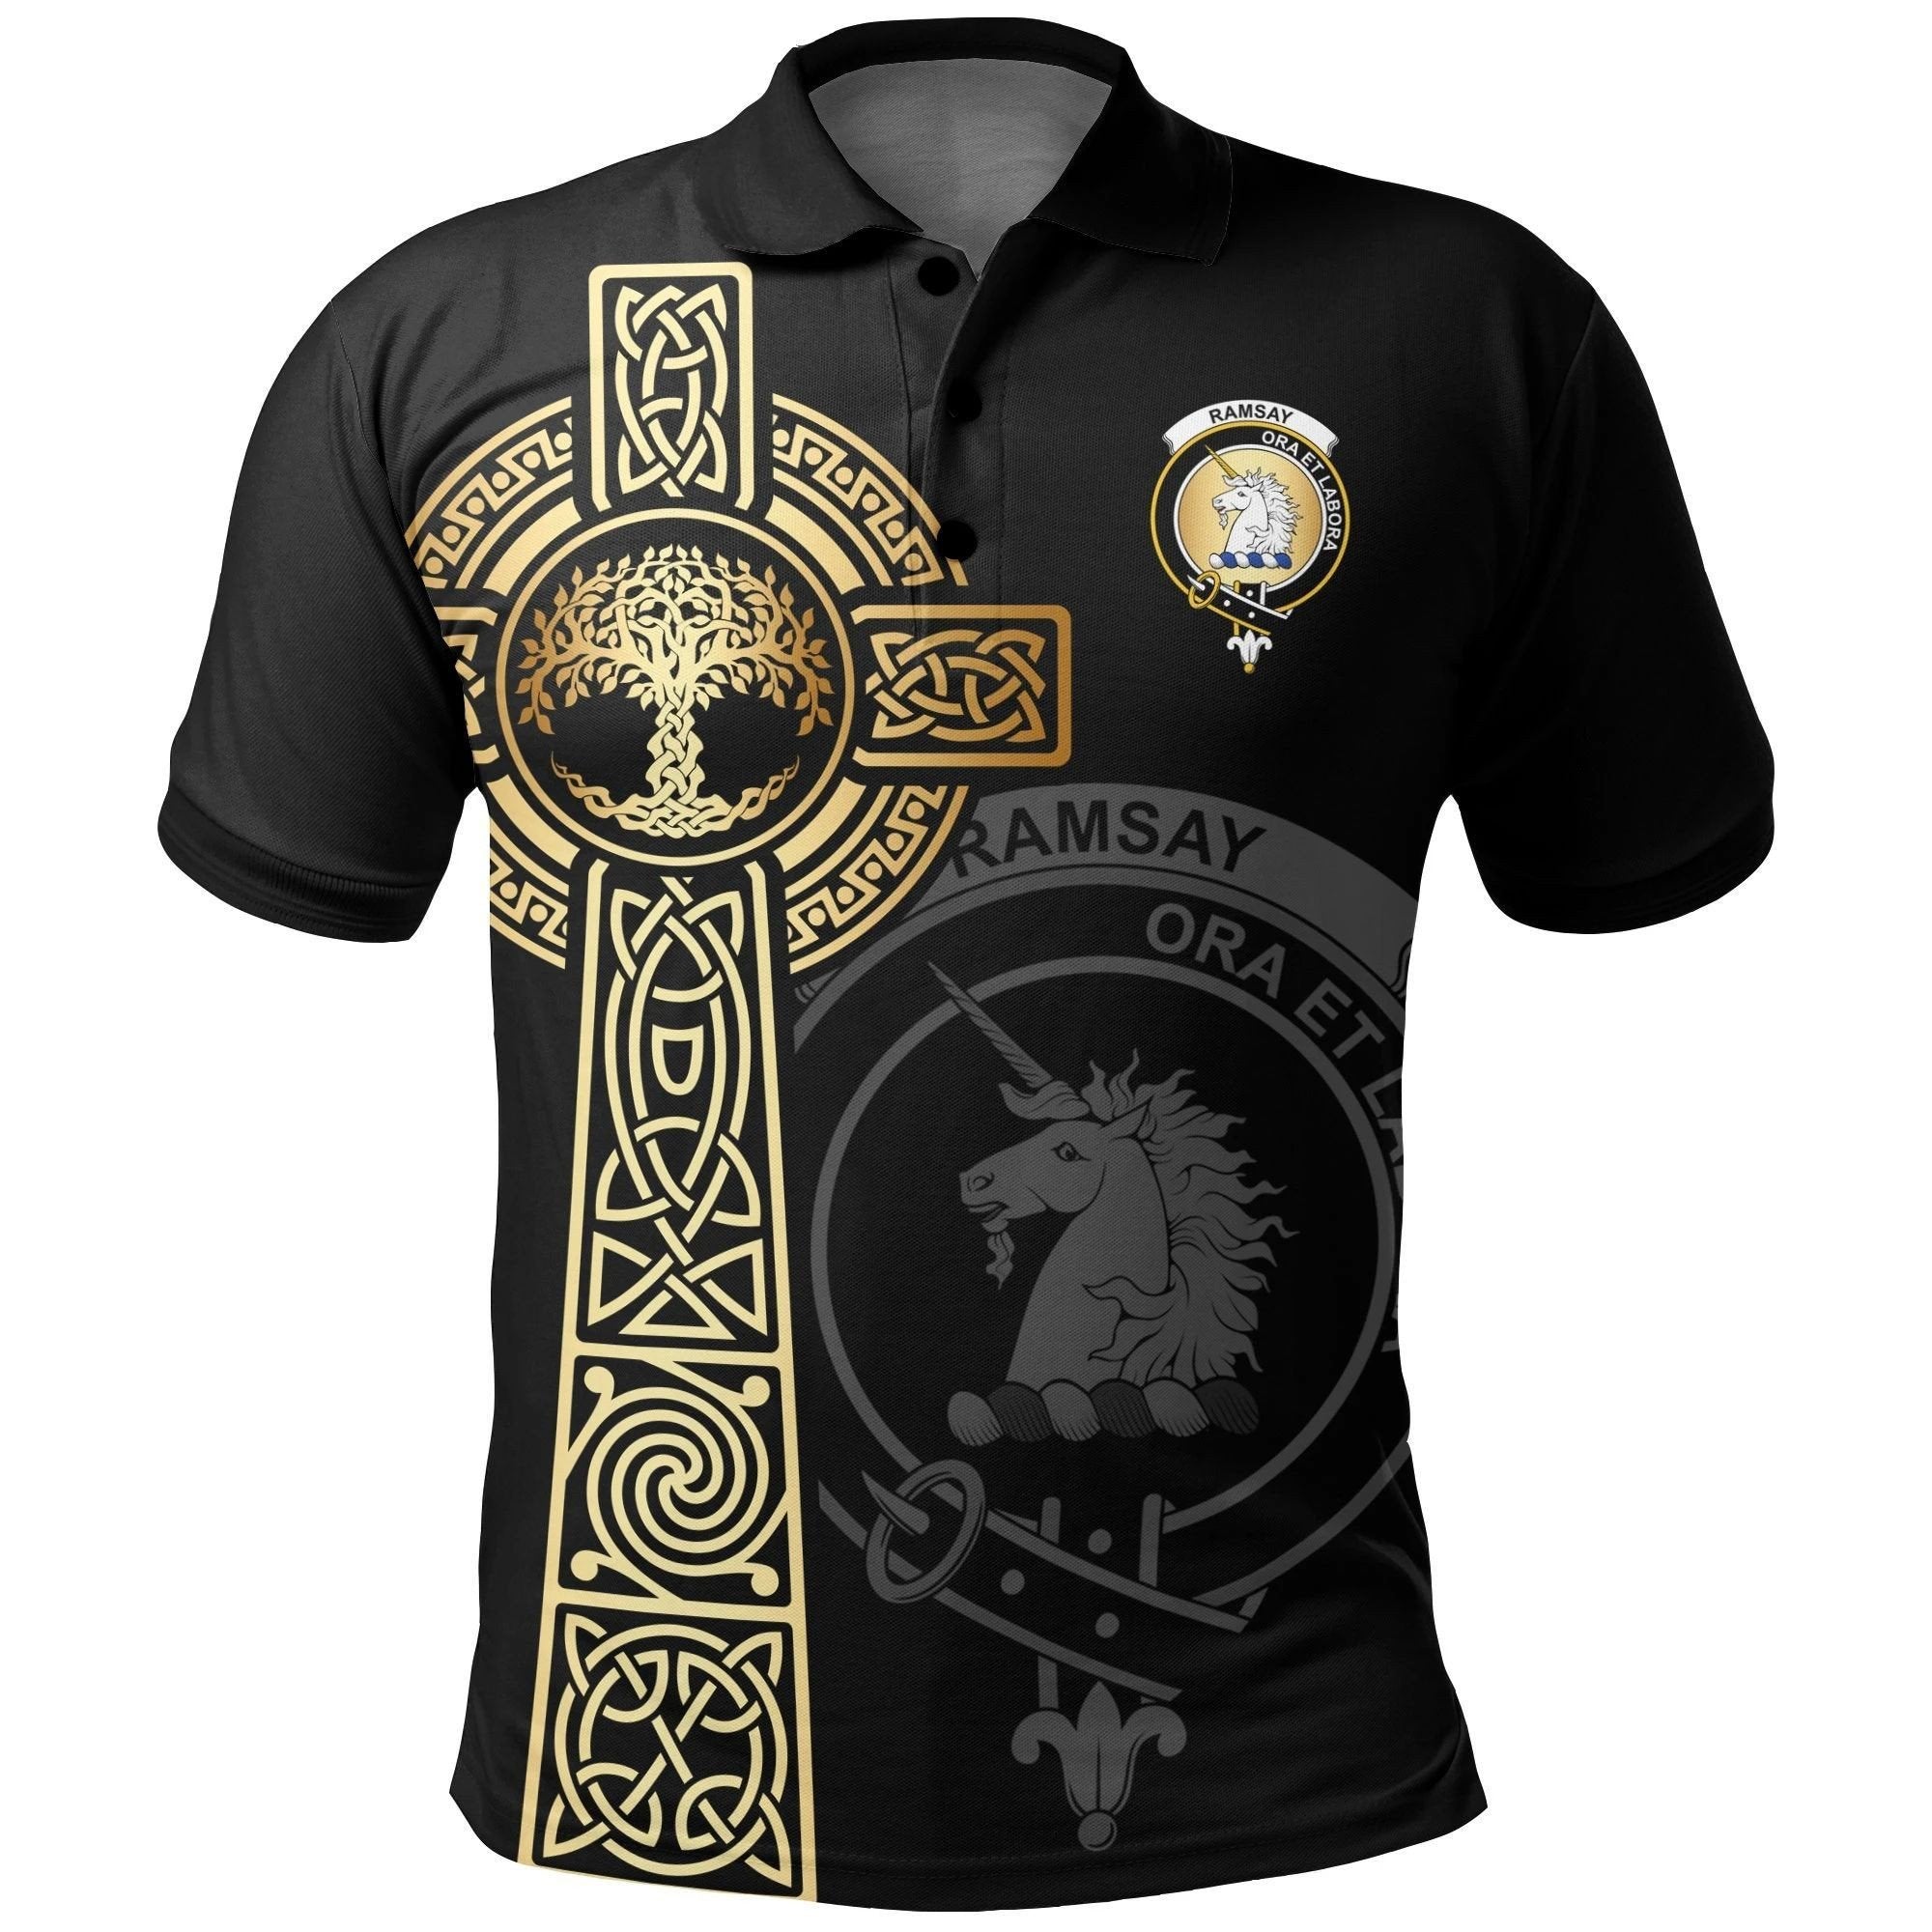 Ramsay Clan Polo Shirt, Scottish Tartan Ramsay Clans Polo Shirt Tree Of Life Style